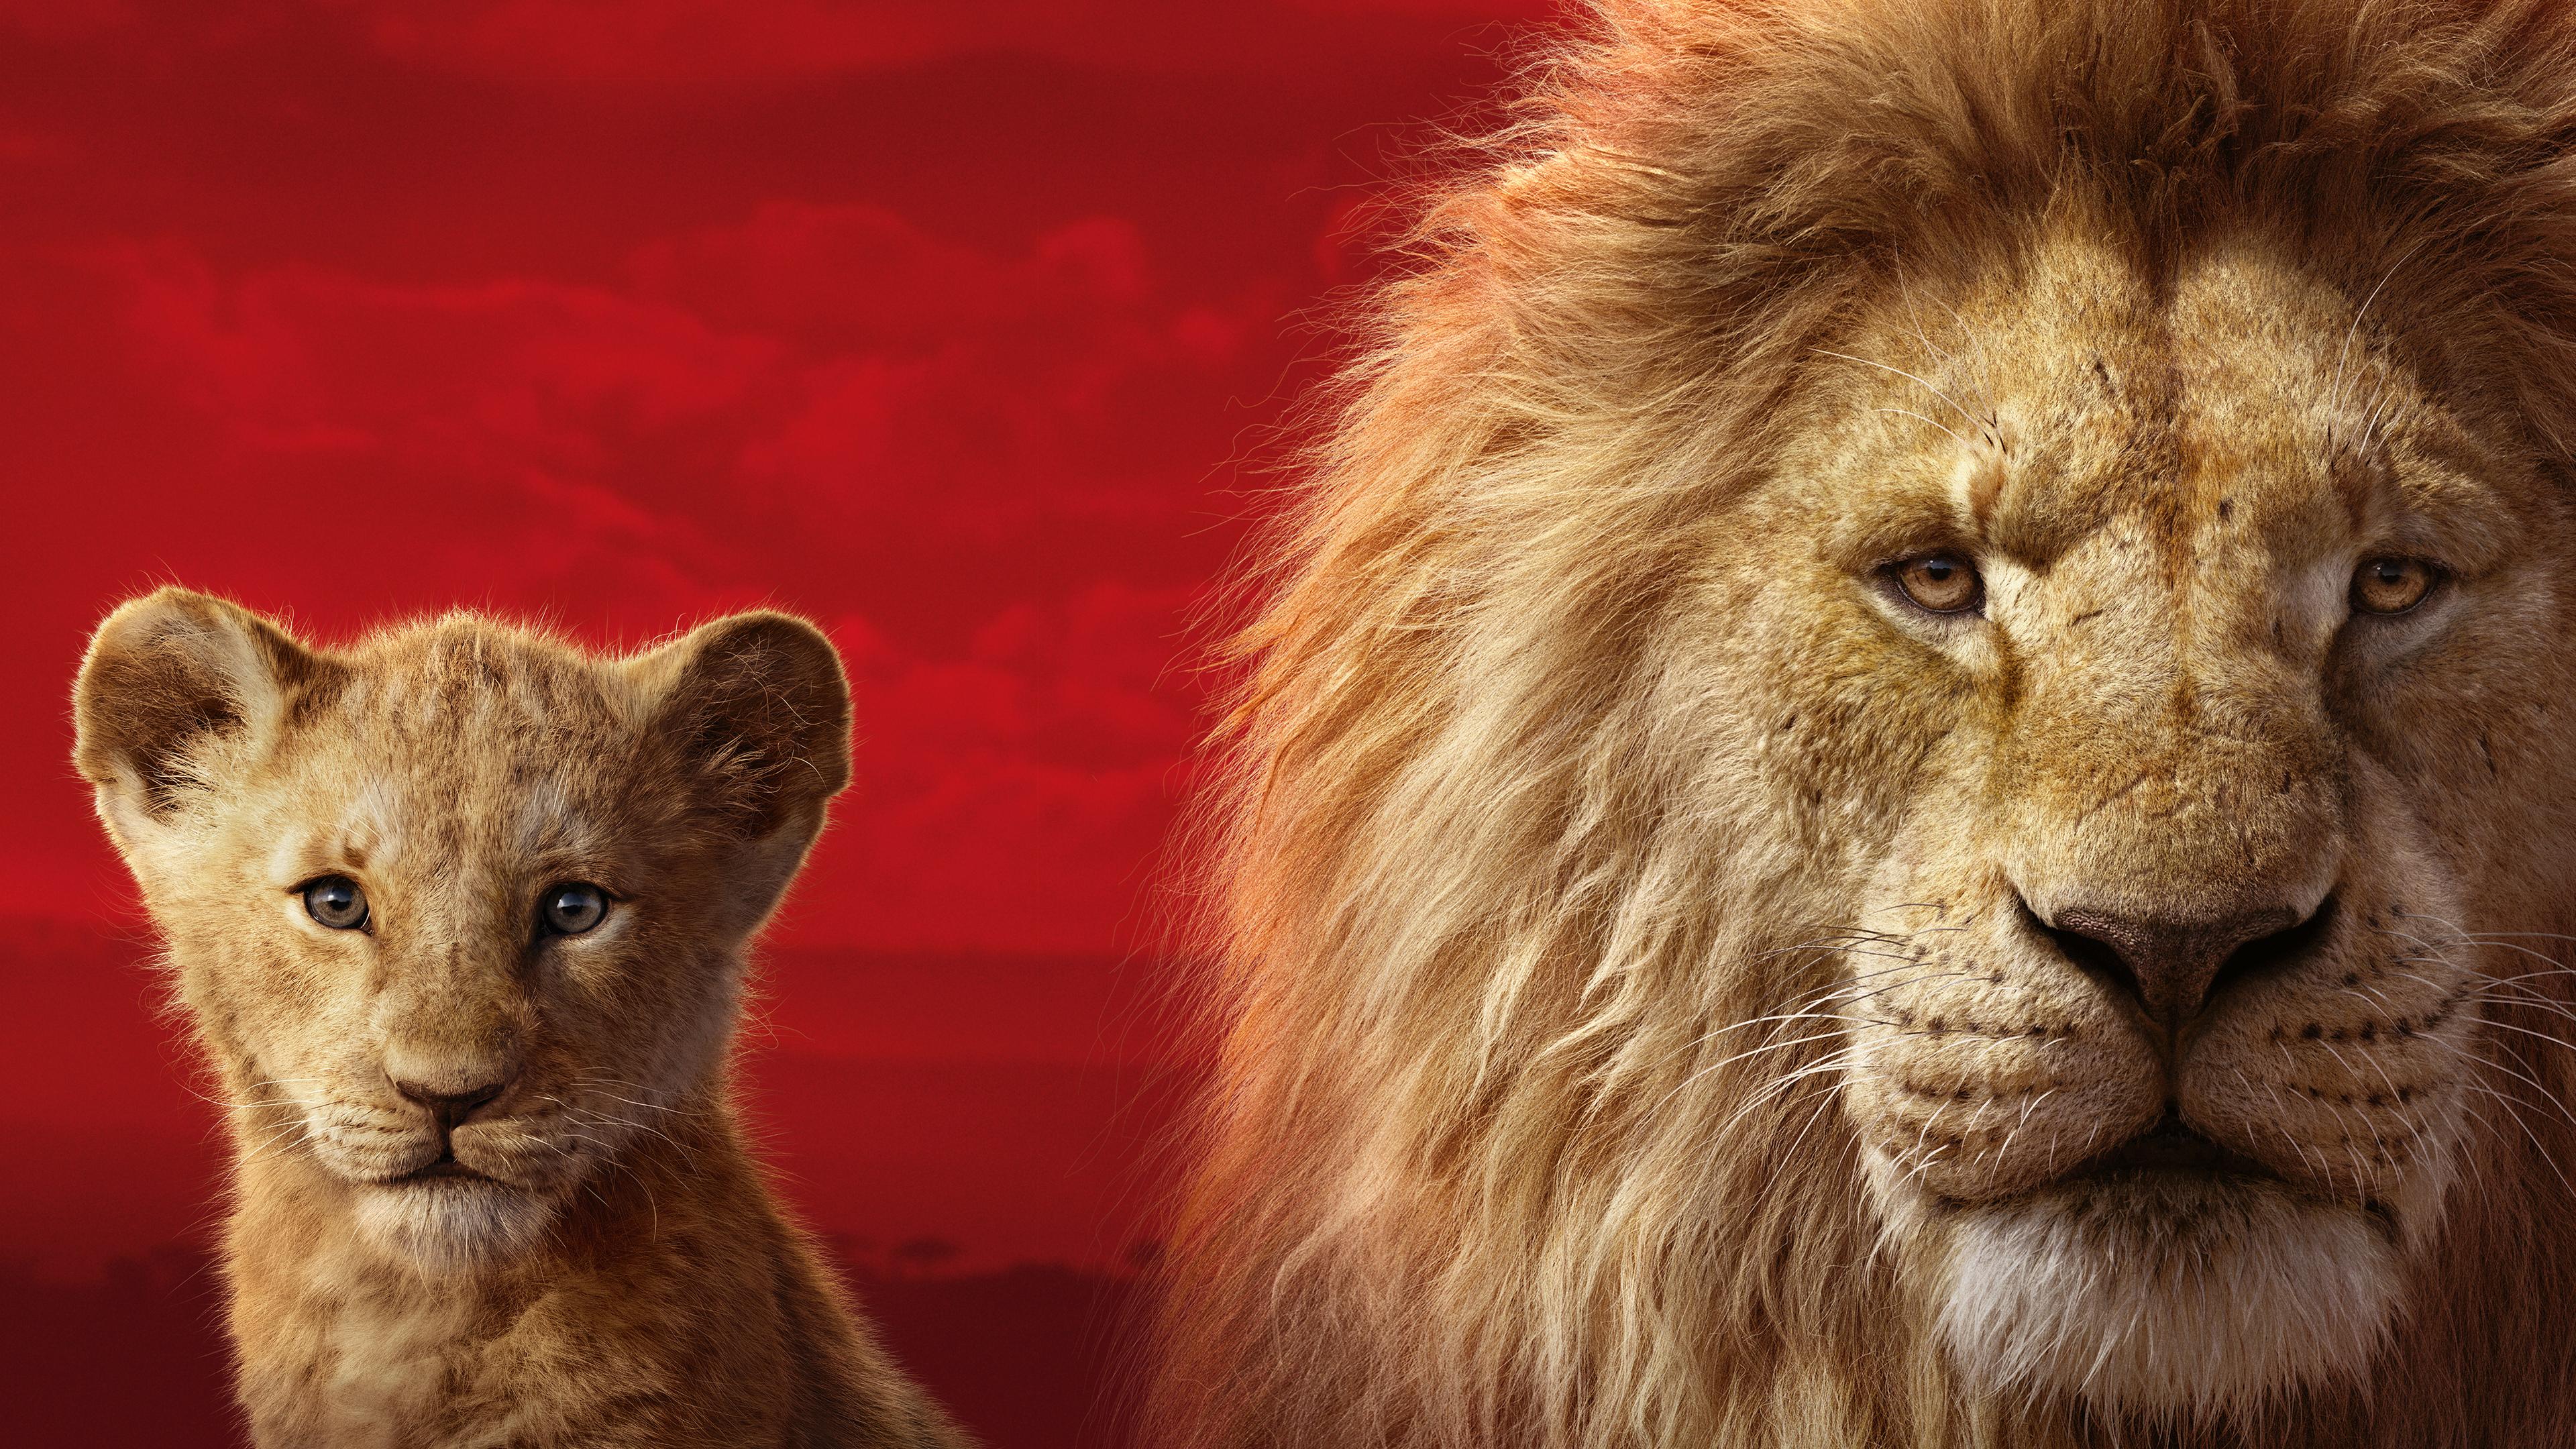 Wallpaper 4k The Lion King 2019 2019 movies wallpaper, 4k